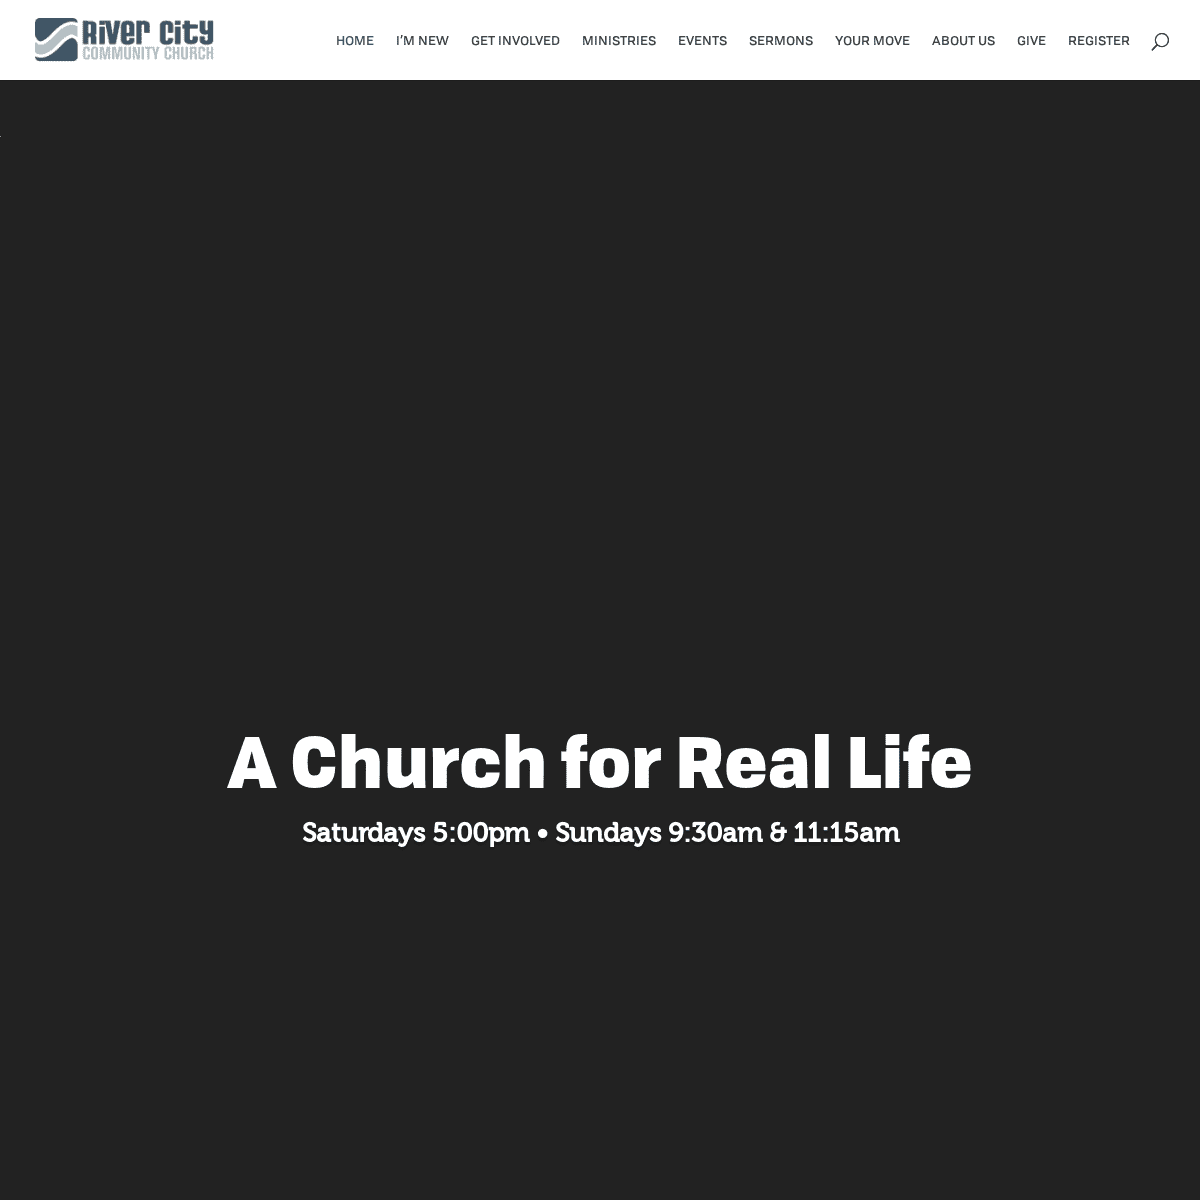 A Church for Real Life - San Antonio Non-Denominational Church | River City Community Church